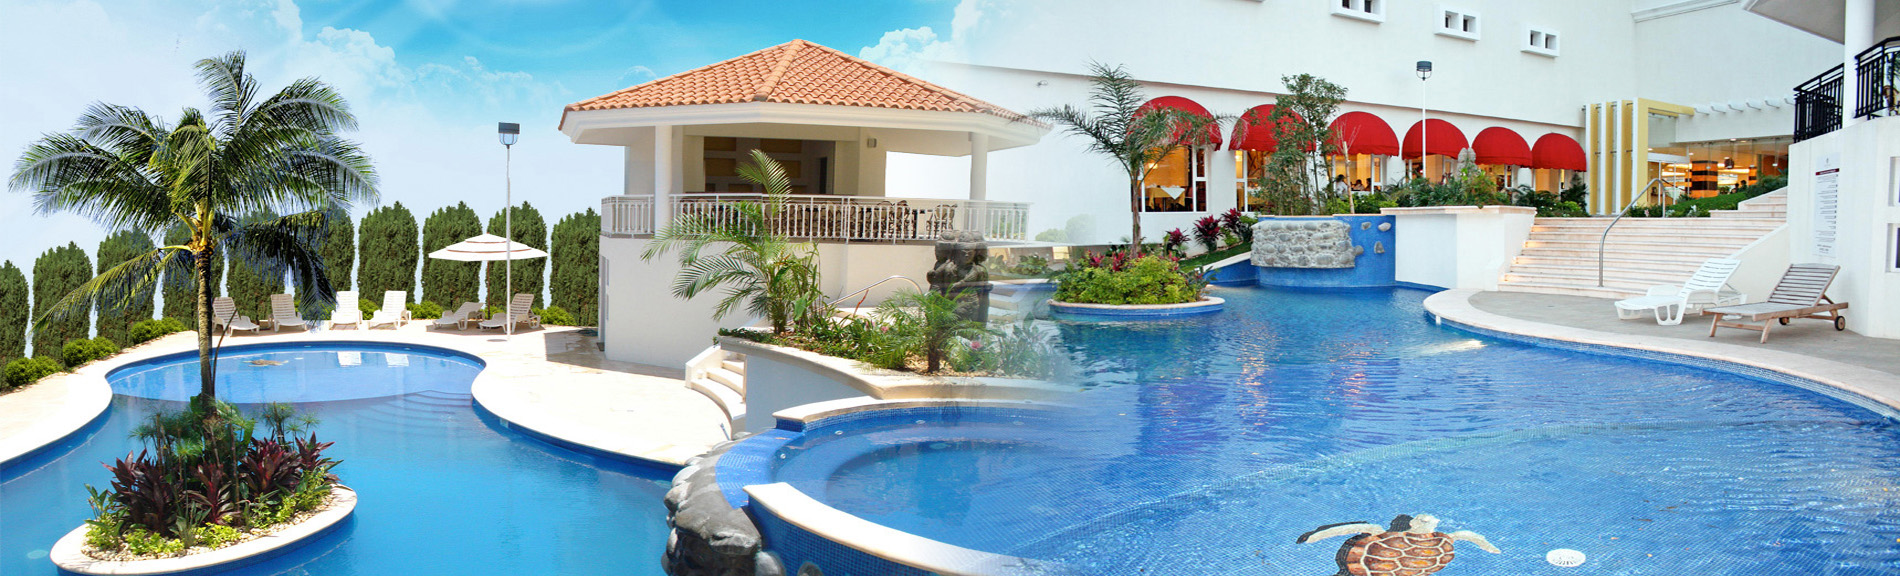 Castelo Hotel - Majestuosamente Inolvidable | Veracruz ...